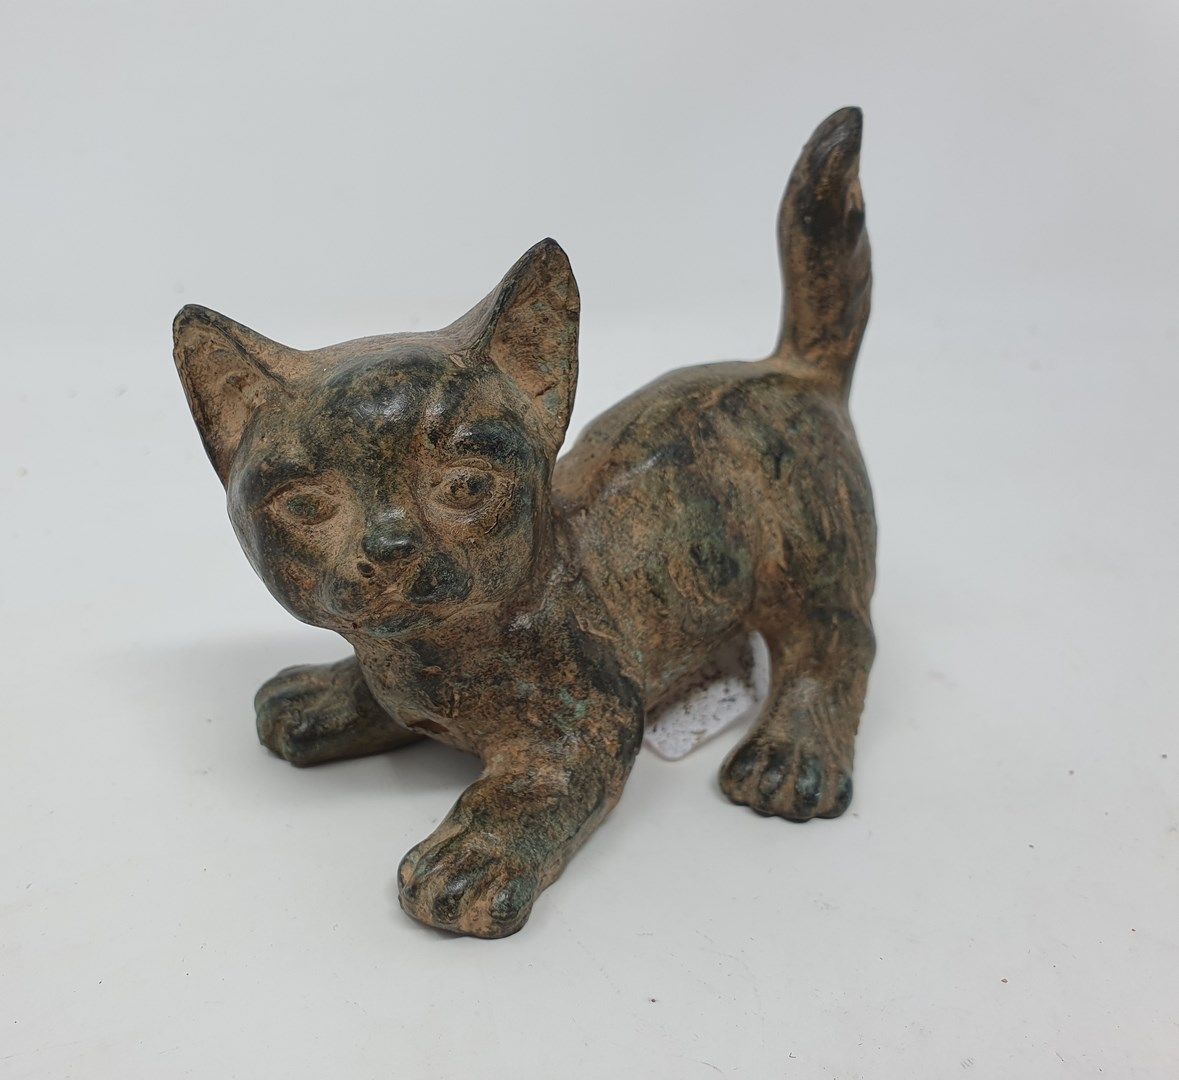 Null CHENET Pierre (20世纪)

小猫

青铜，有阴影的赭石色，底部有艺术家的印章

高度：7.5厘米 - 长度：9厘米